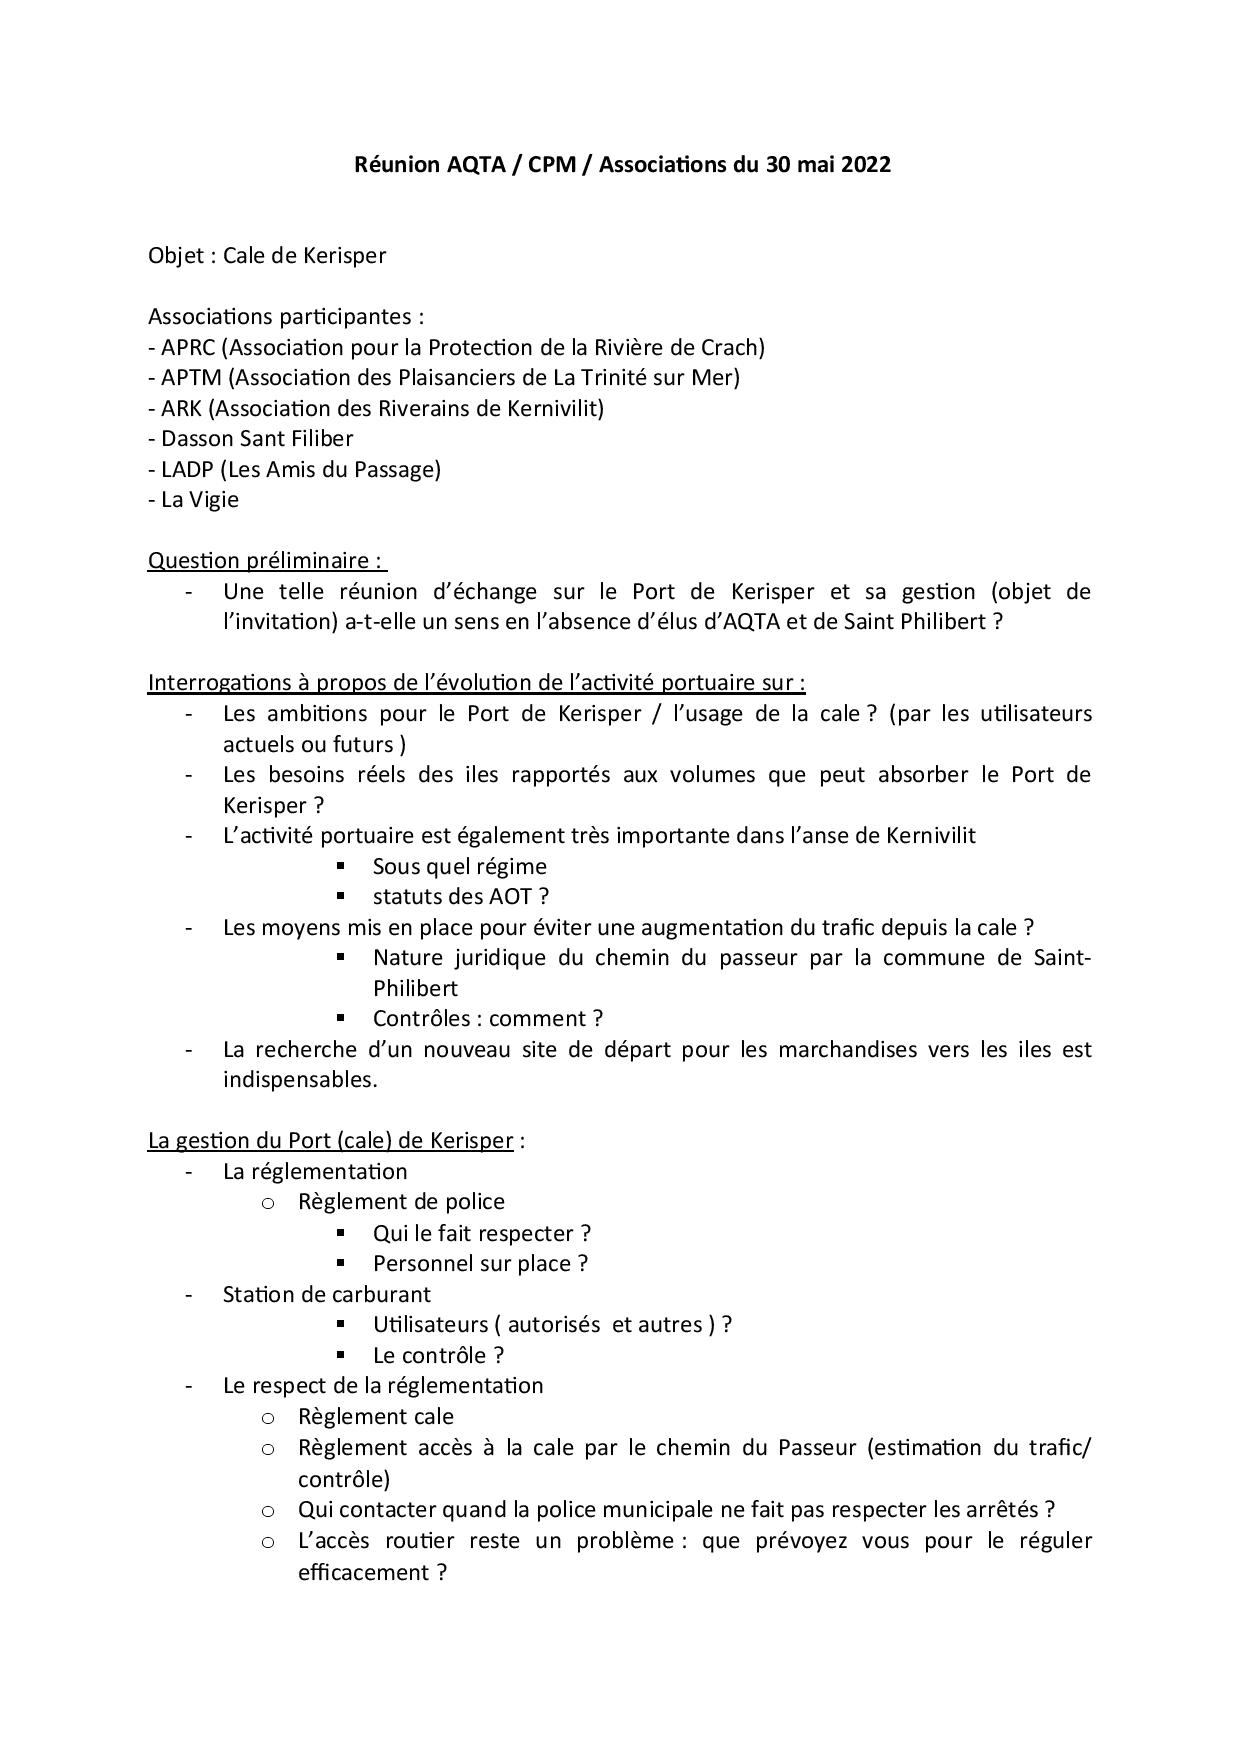 2022 05 30 Réunion AQTA CPM Associations-page-001.jpg